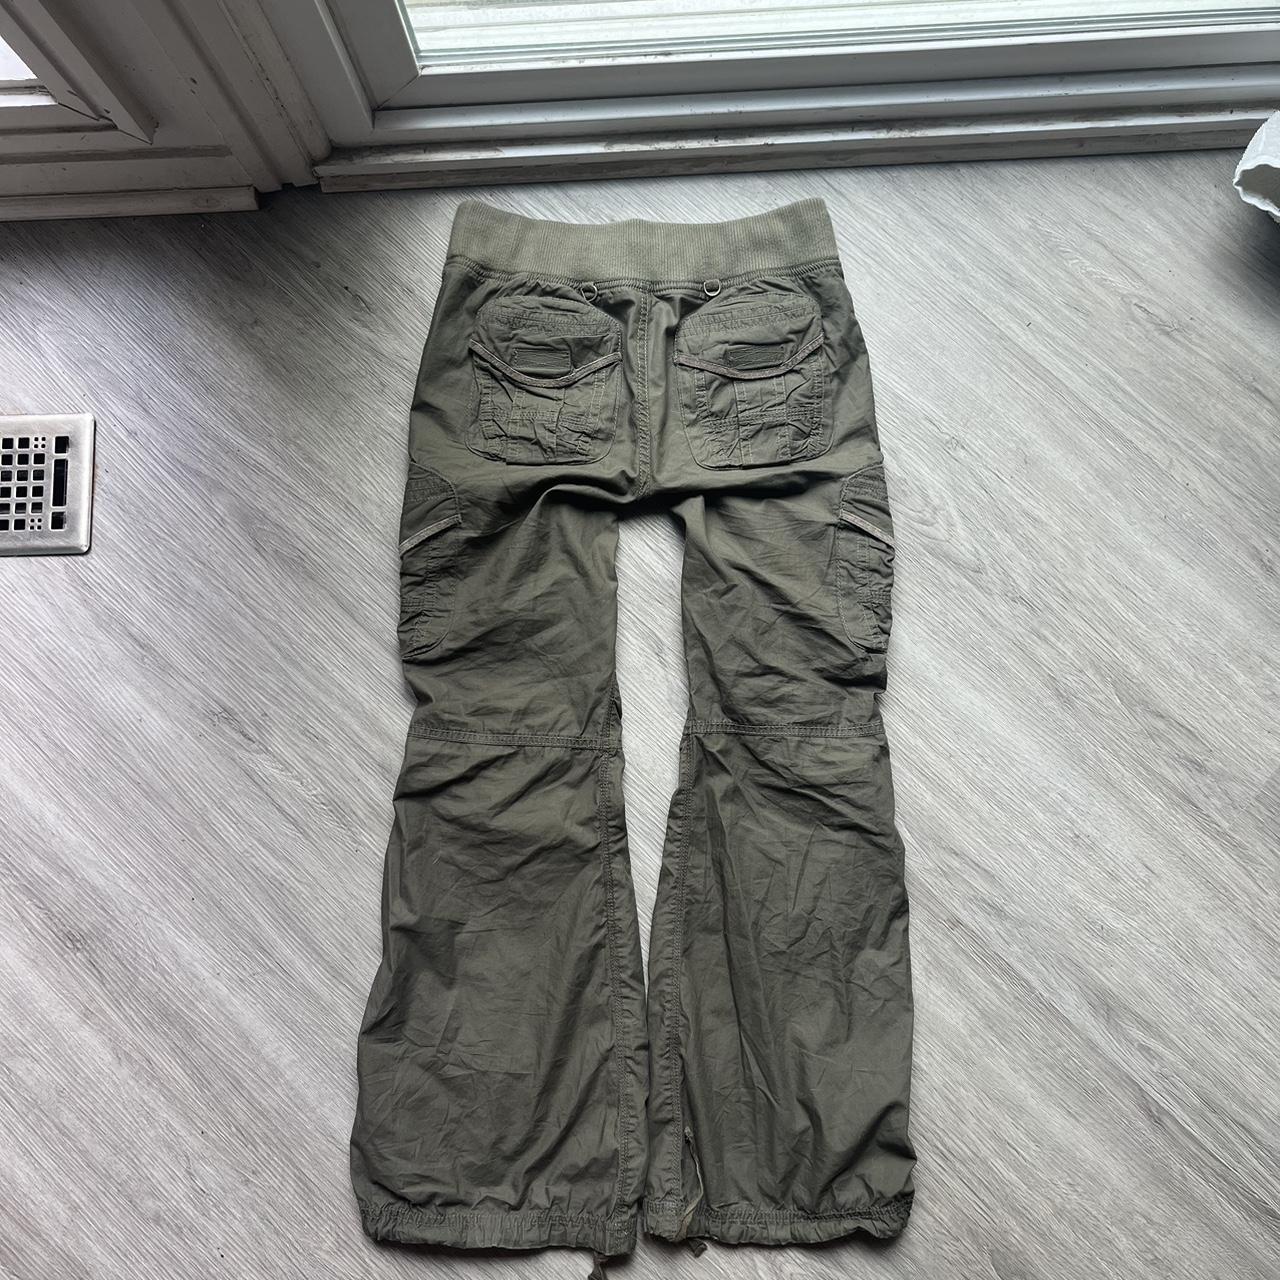 G.O.A parachute cargo pants, 9/10 condition, size m